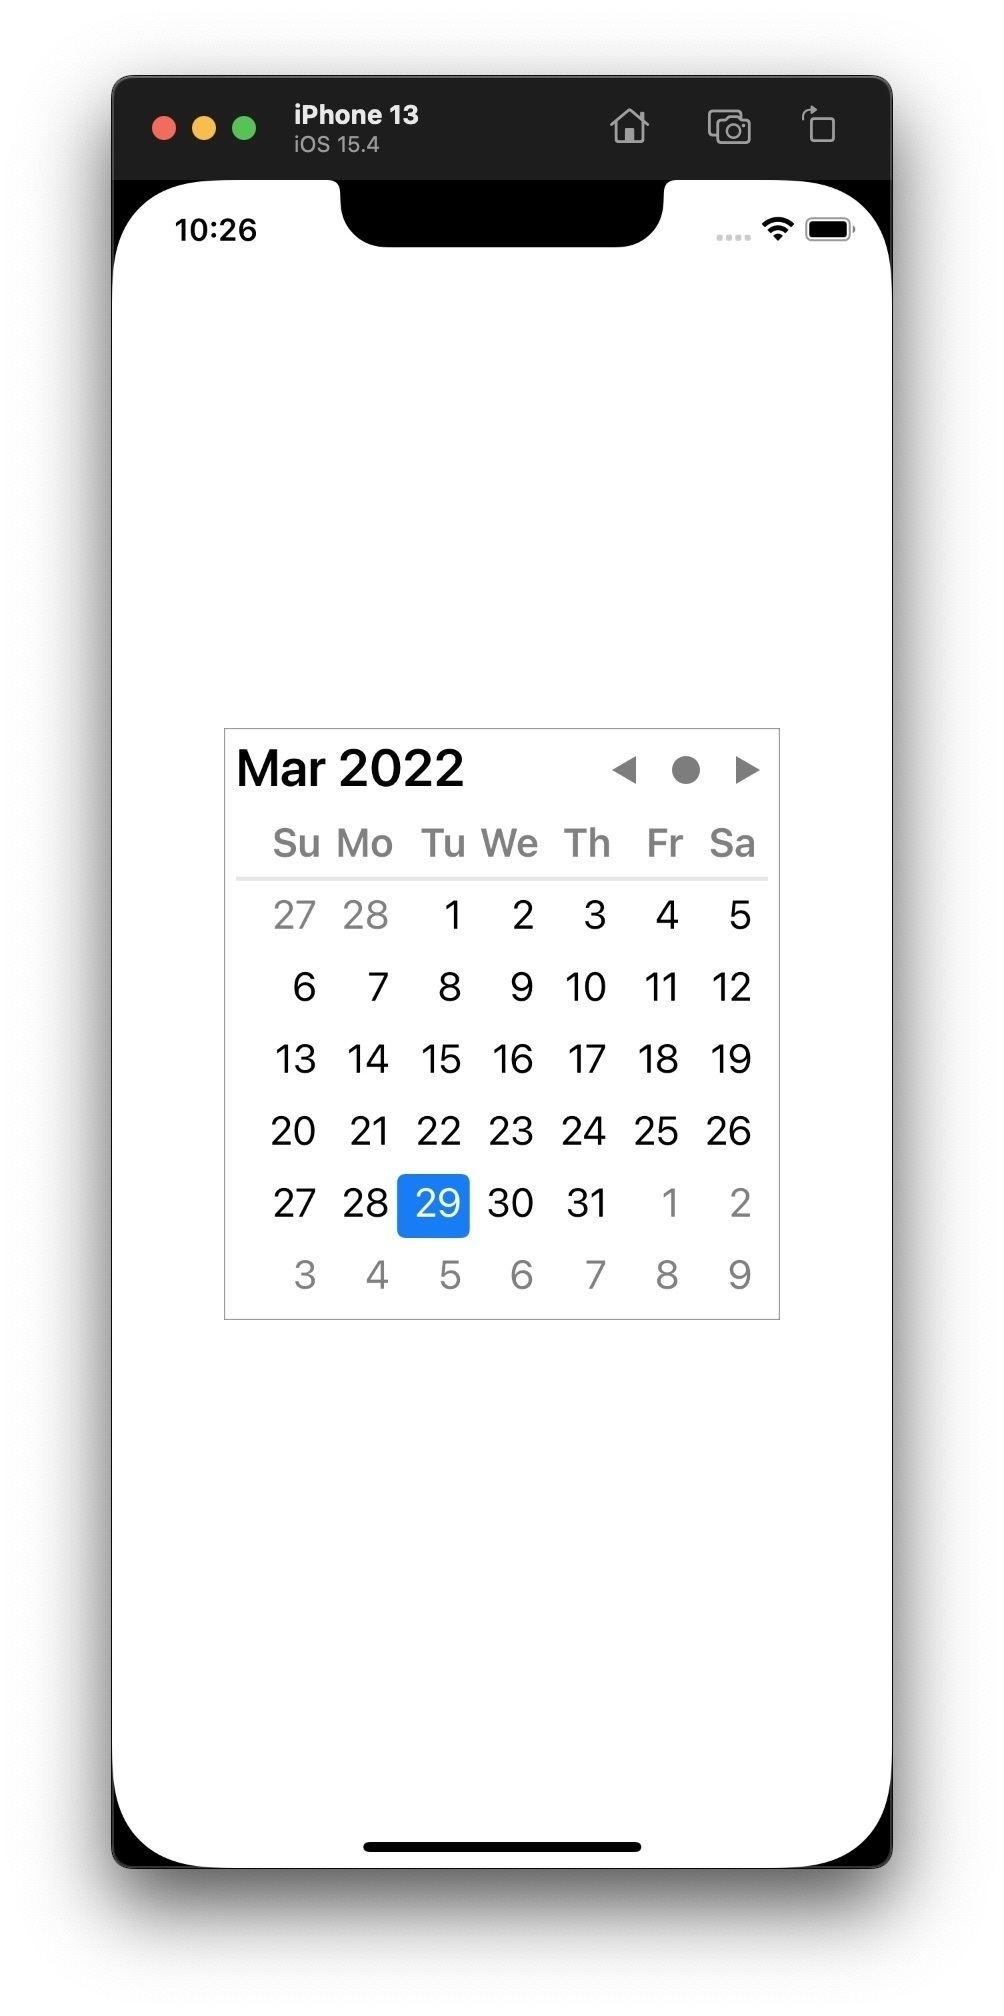 Screenshot of iOS simulator showing a custom calendar picker view in the context of an iPhone 13 screen.